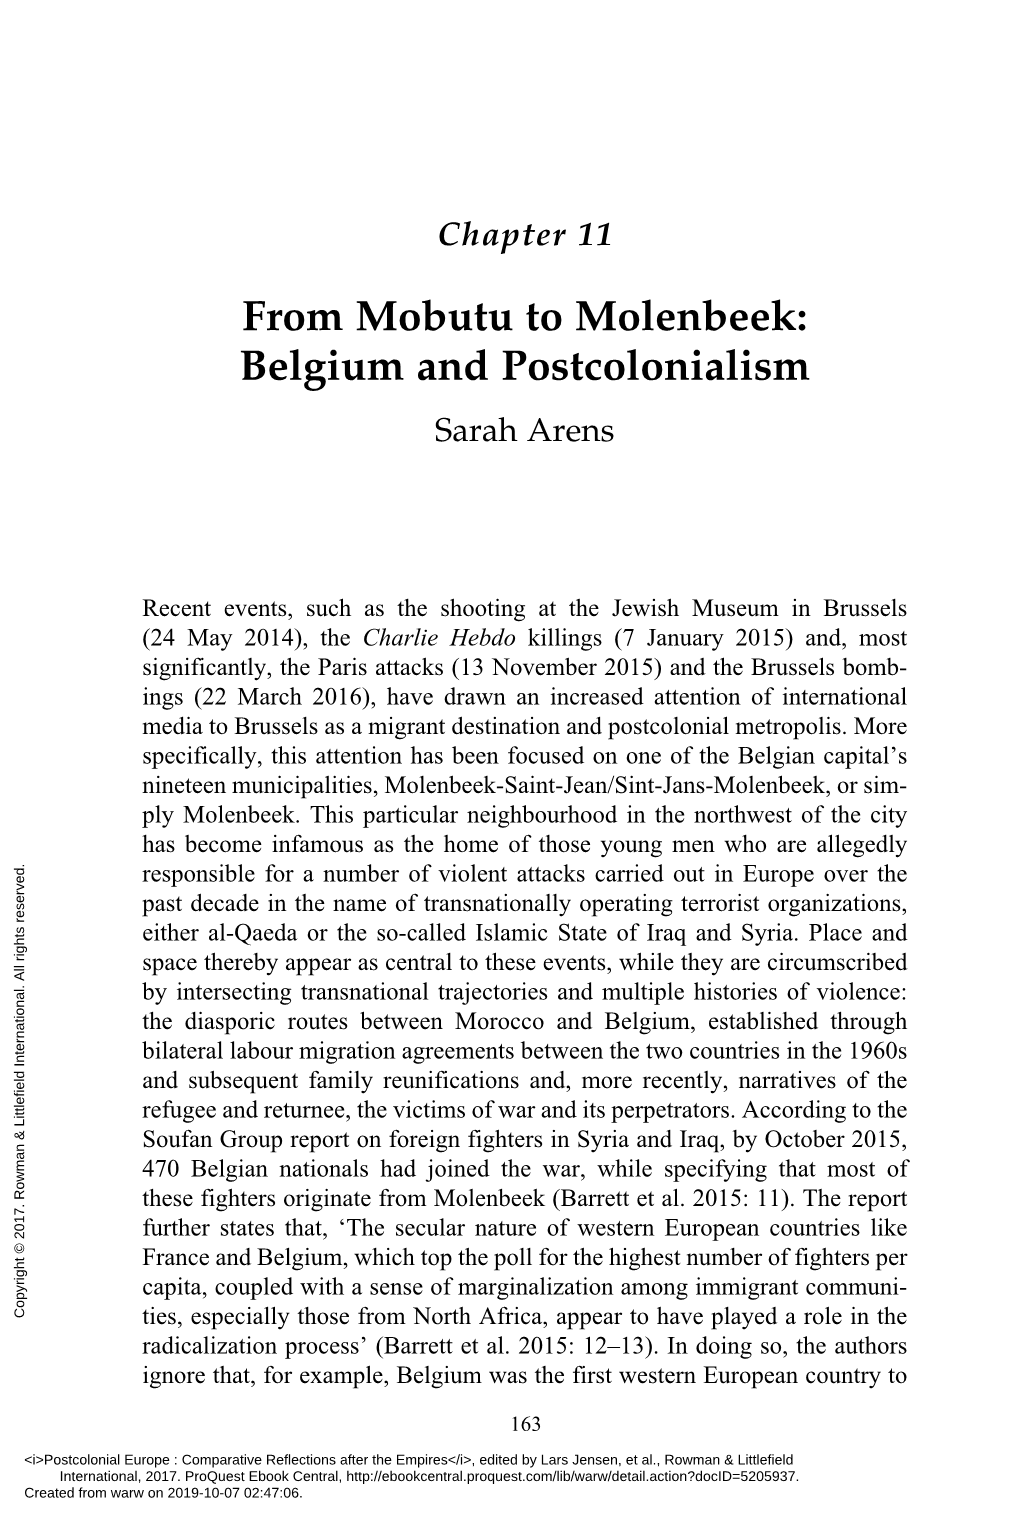 From Mobutu to Molenbeek: Belgium and Postcolonialism Sarah Arens